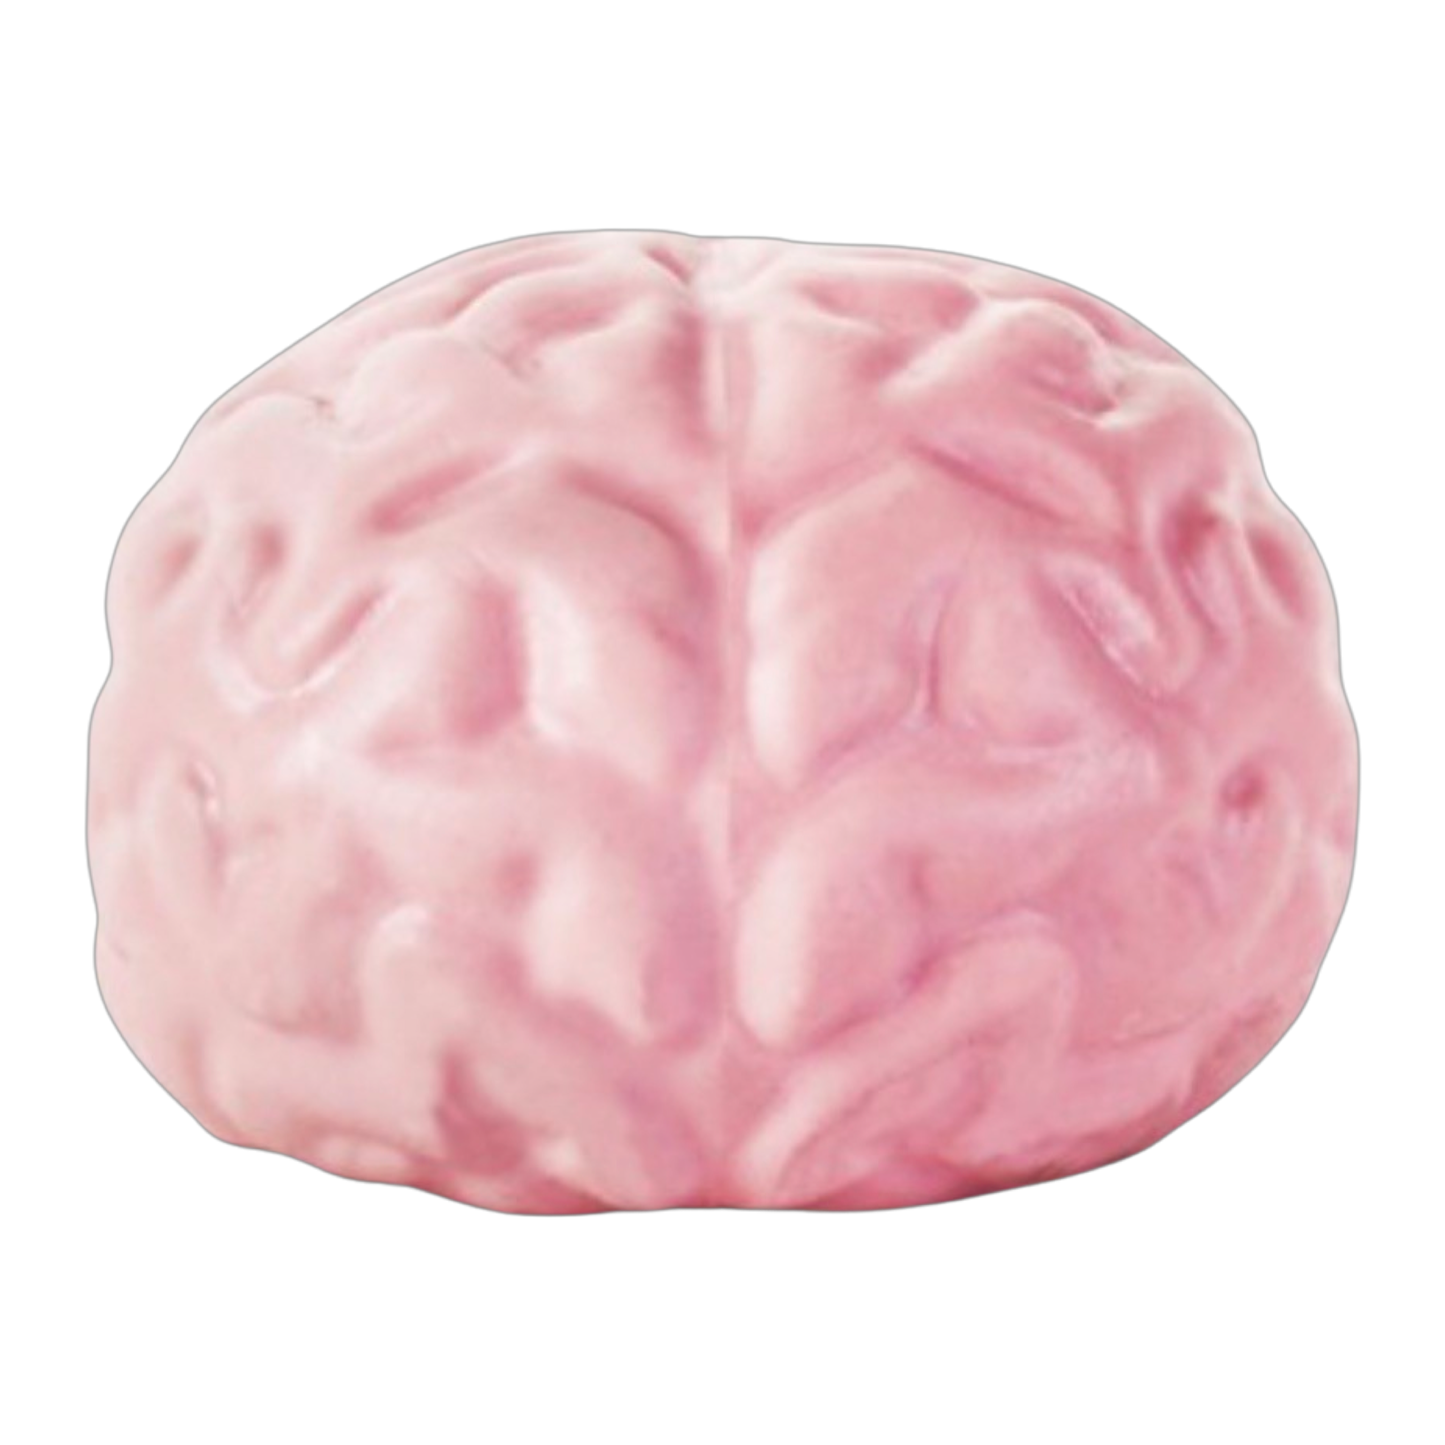 Giant Brain Stress Ball